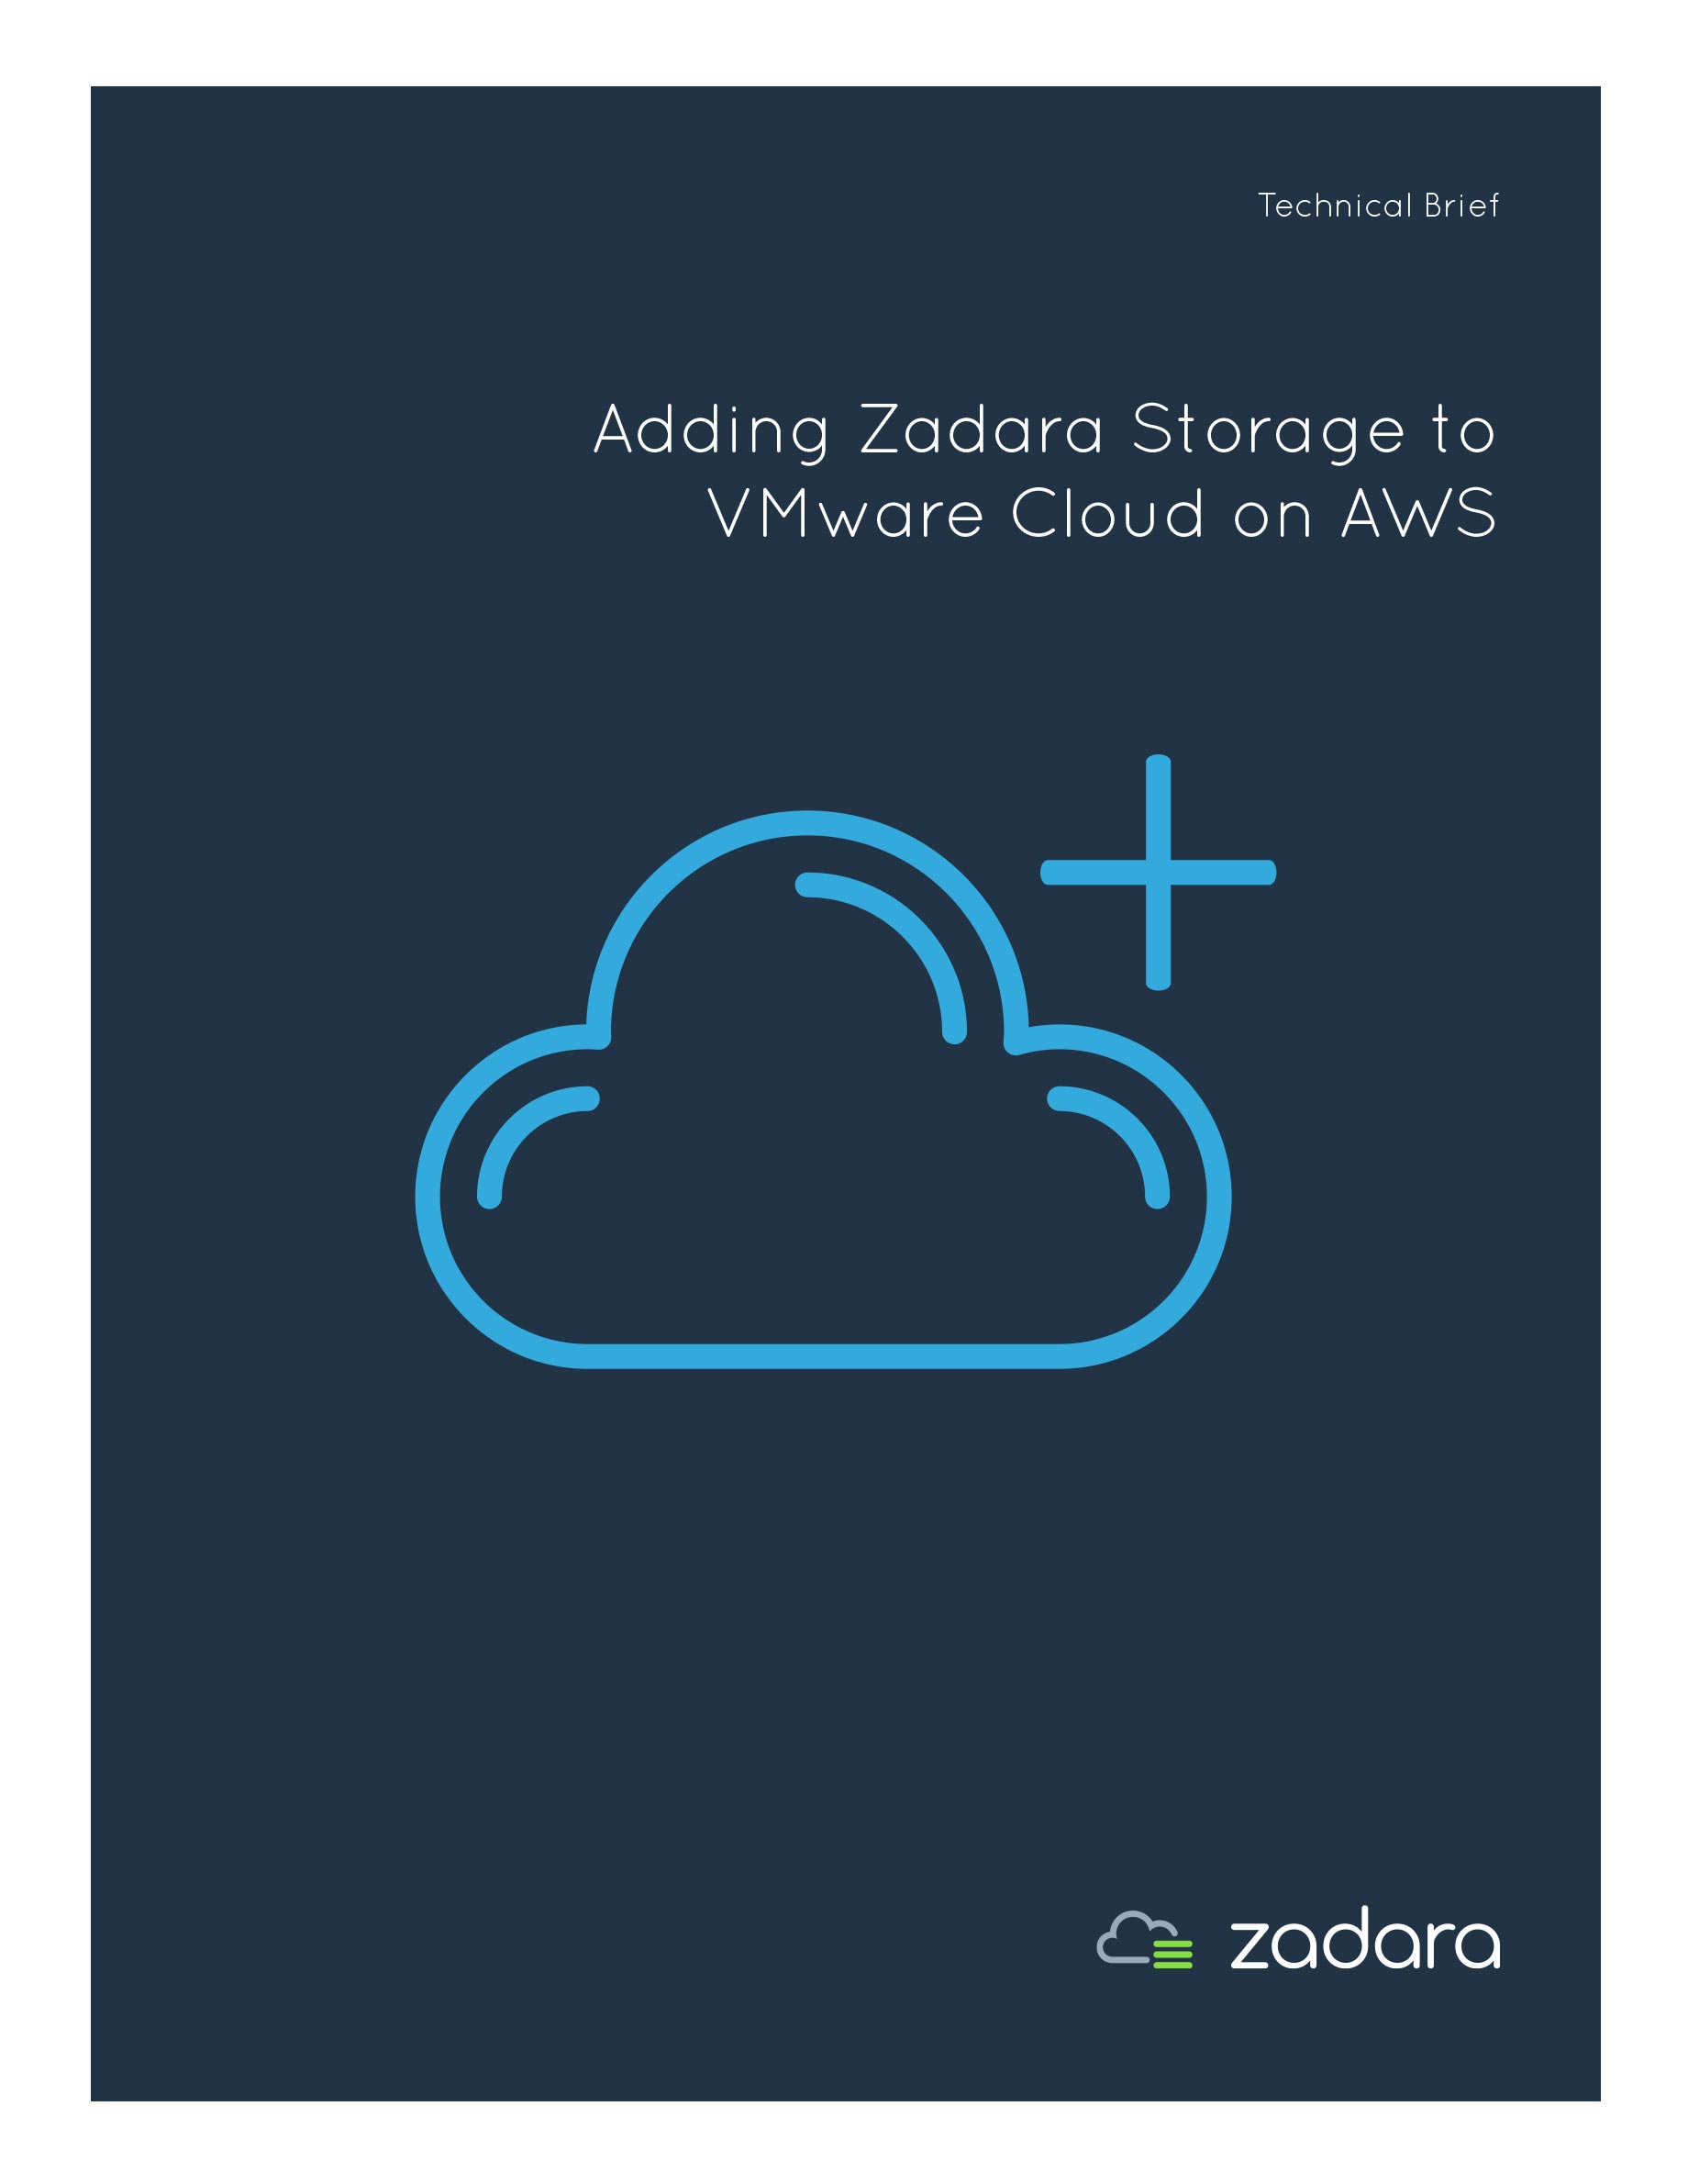 Technical Brief: Adding Zadara Storage to VMware Cloud on AWS